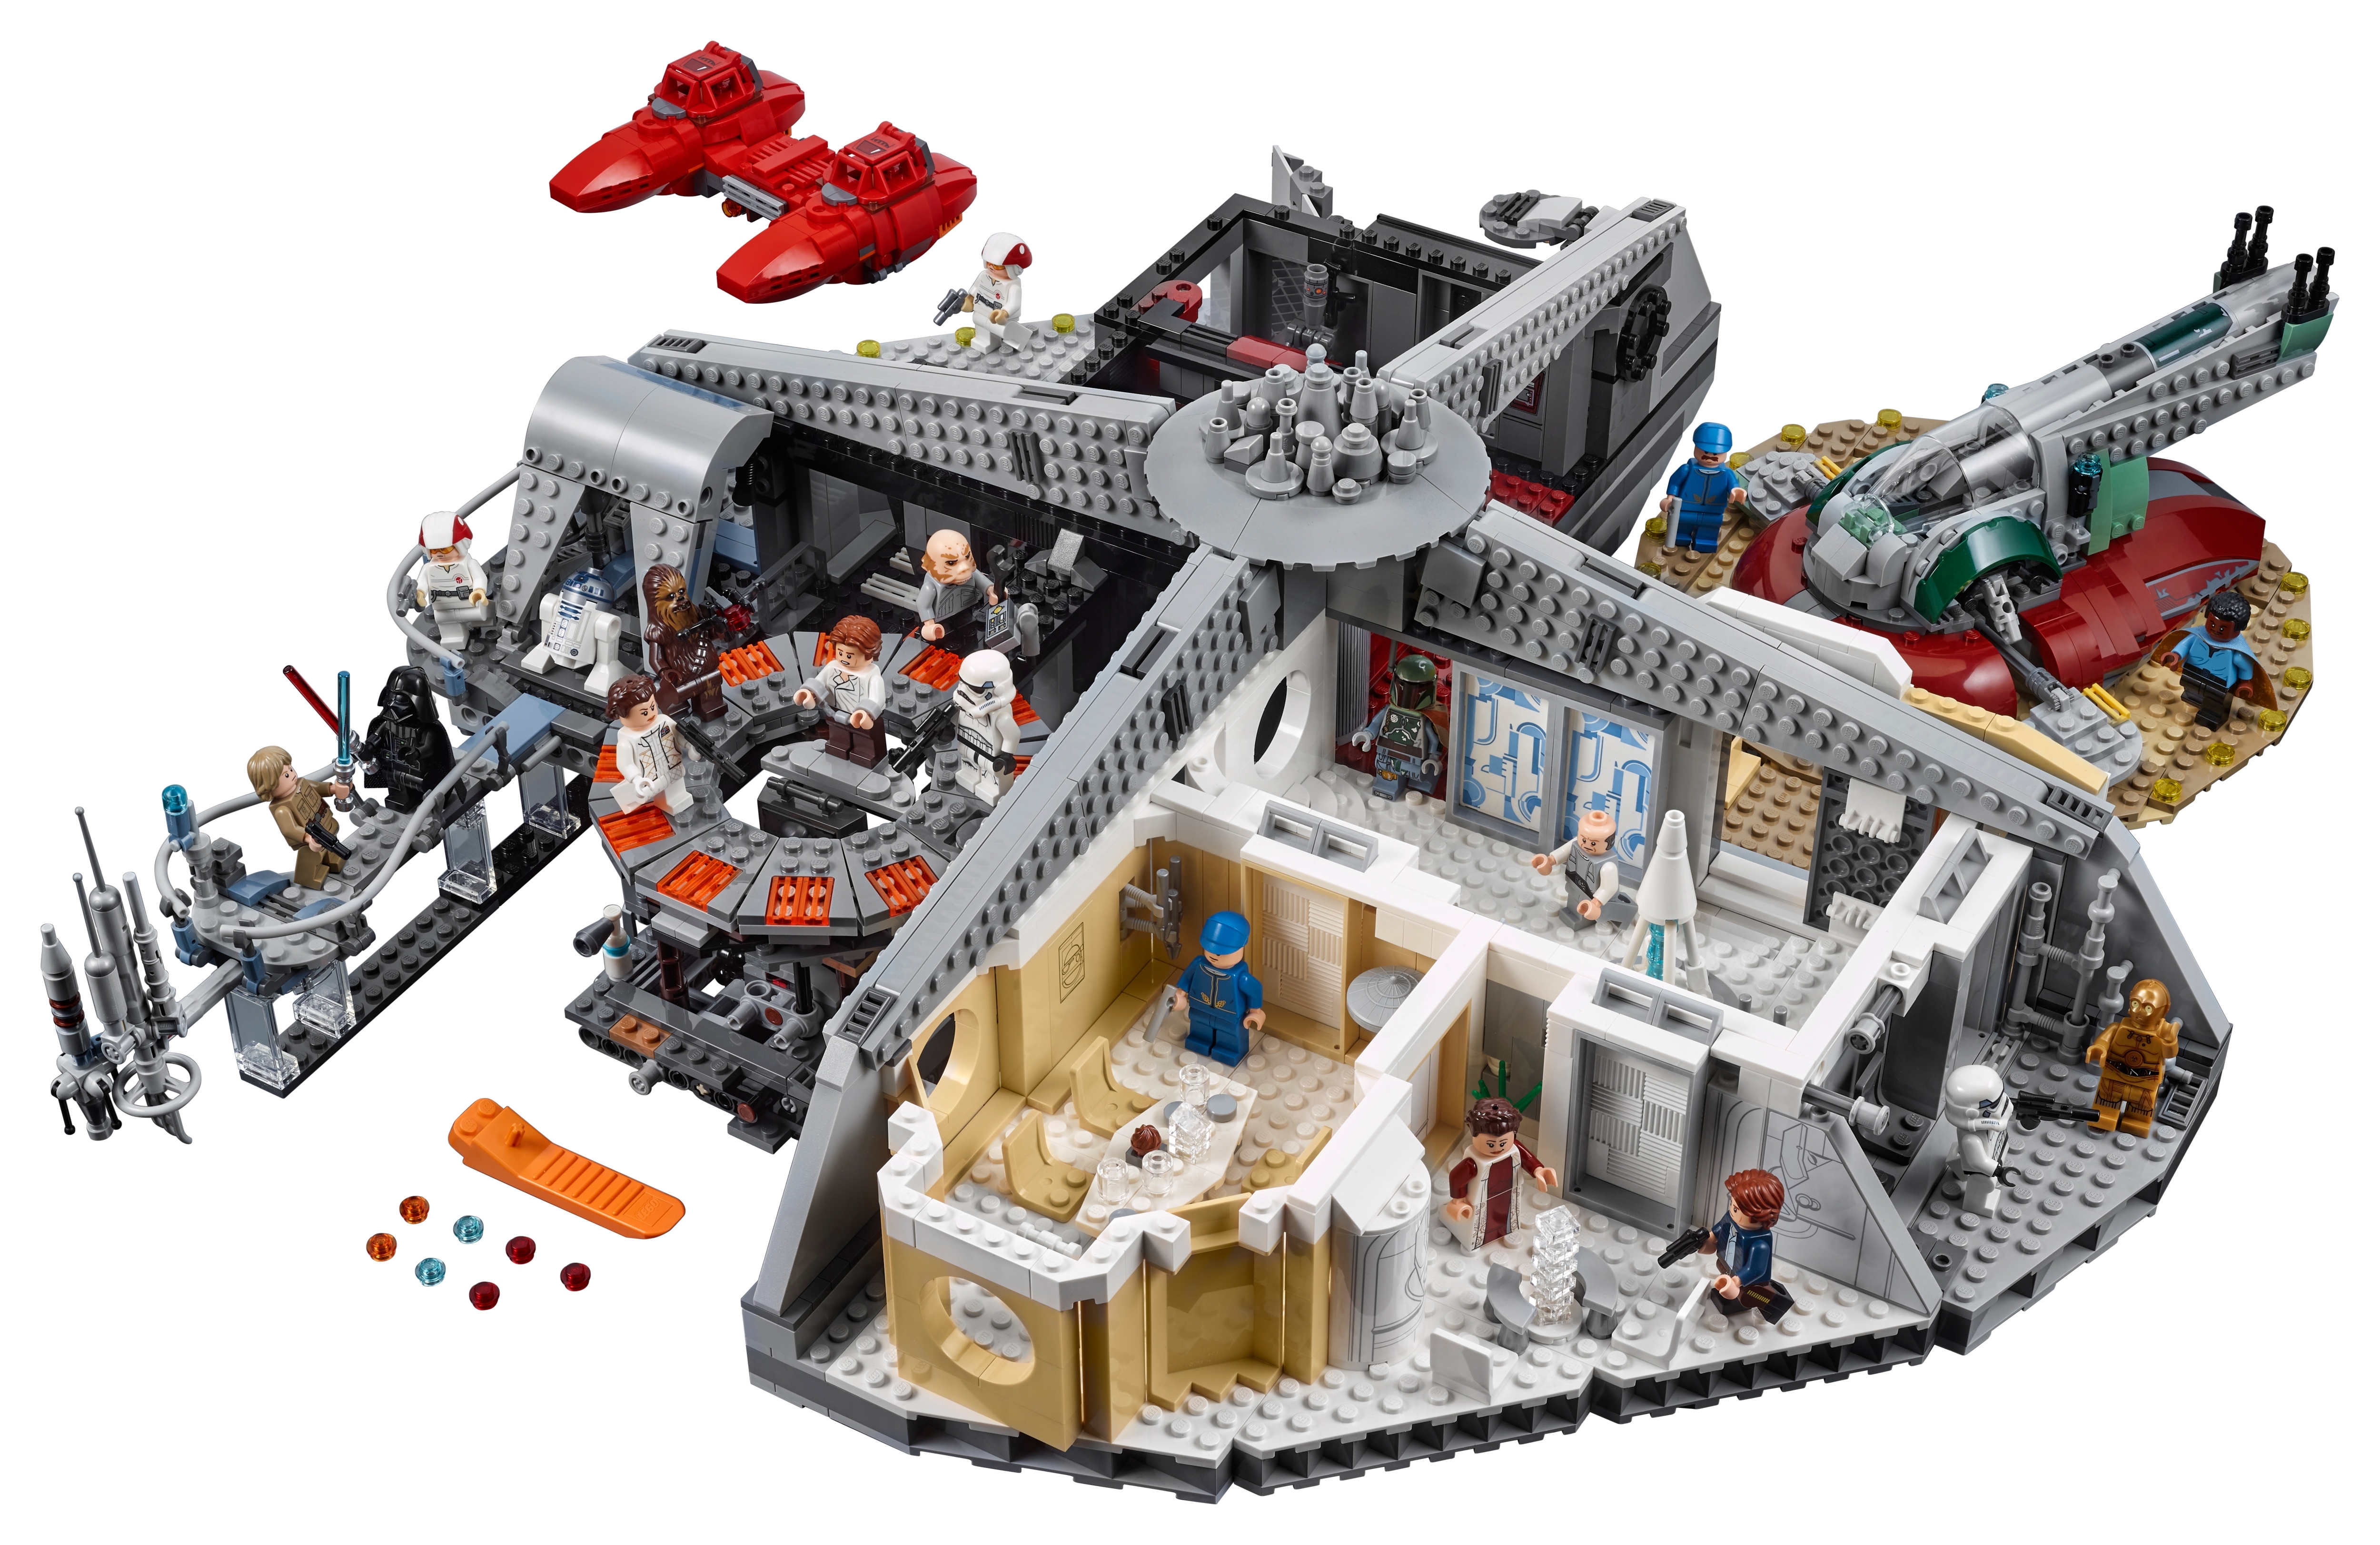 New 2019 LEGO Star Wars TM Betrayal at Cloud City 75222 2812 Pieces 